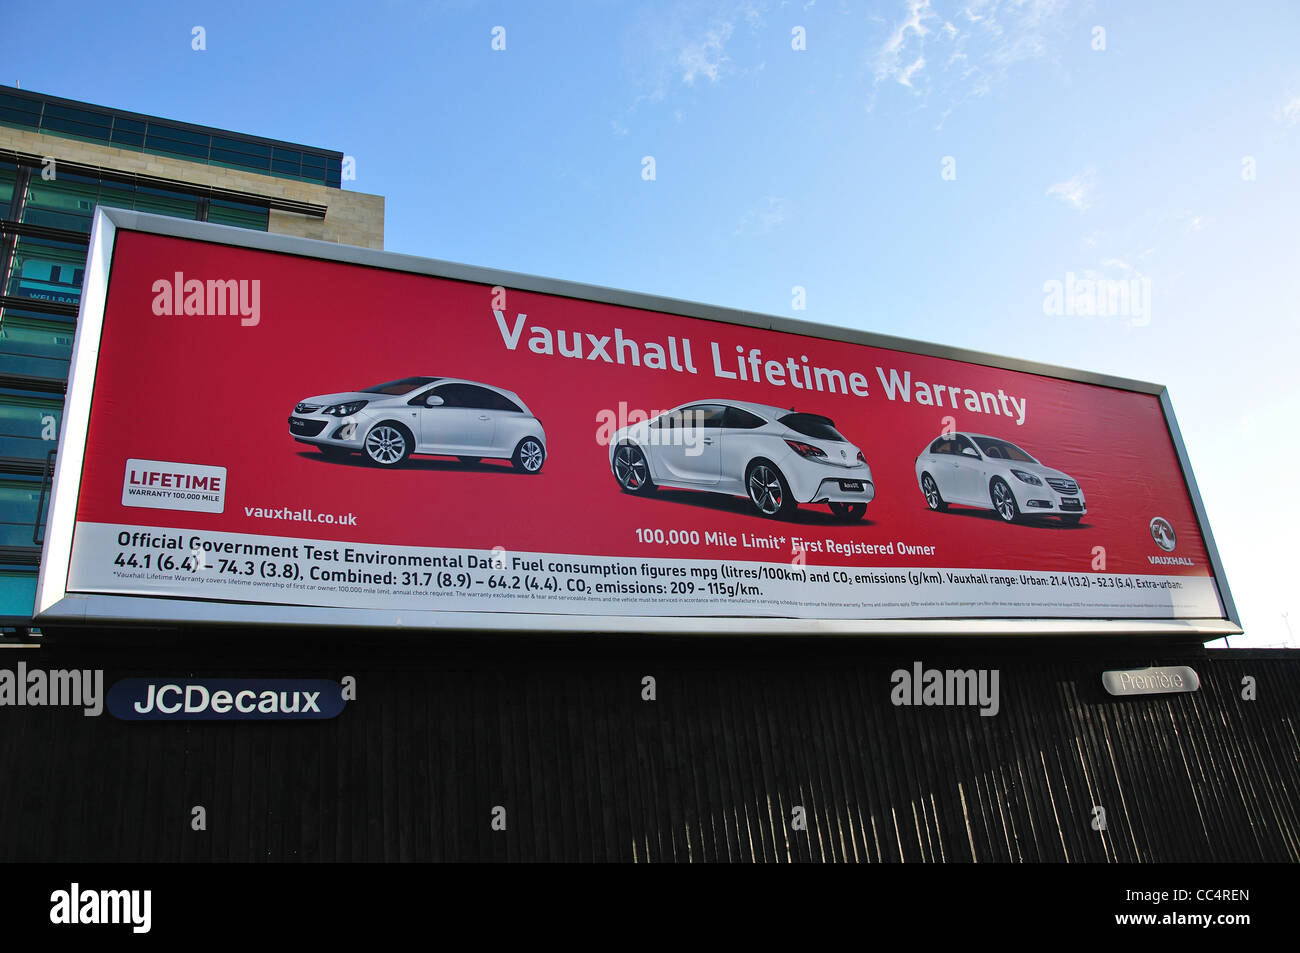 Vauxhall car billboard advertisement in downtown Newcastle upon Tyne, Tyne and Wear, England, United Kingdom Stock Photo